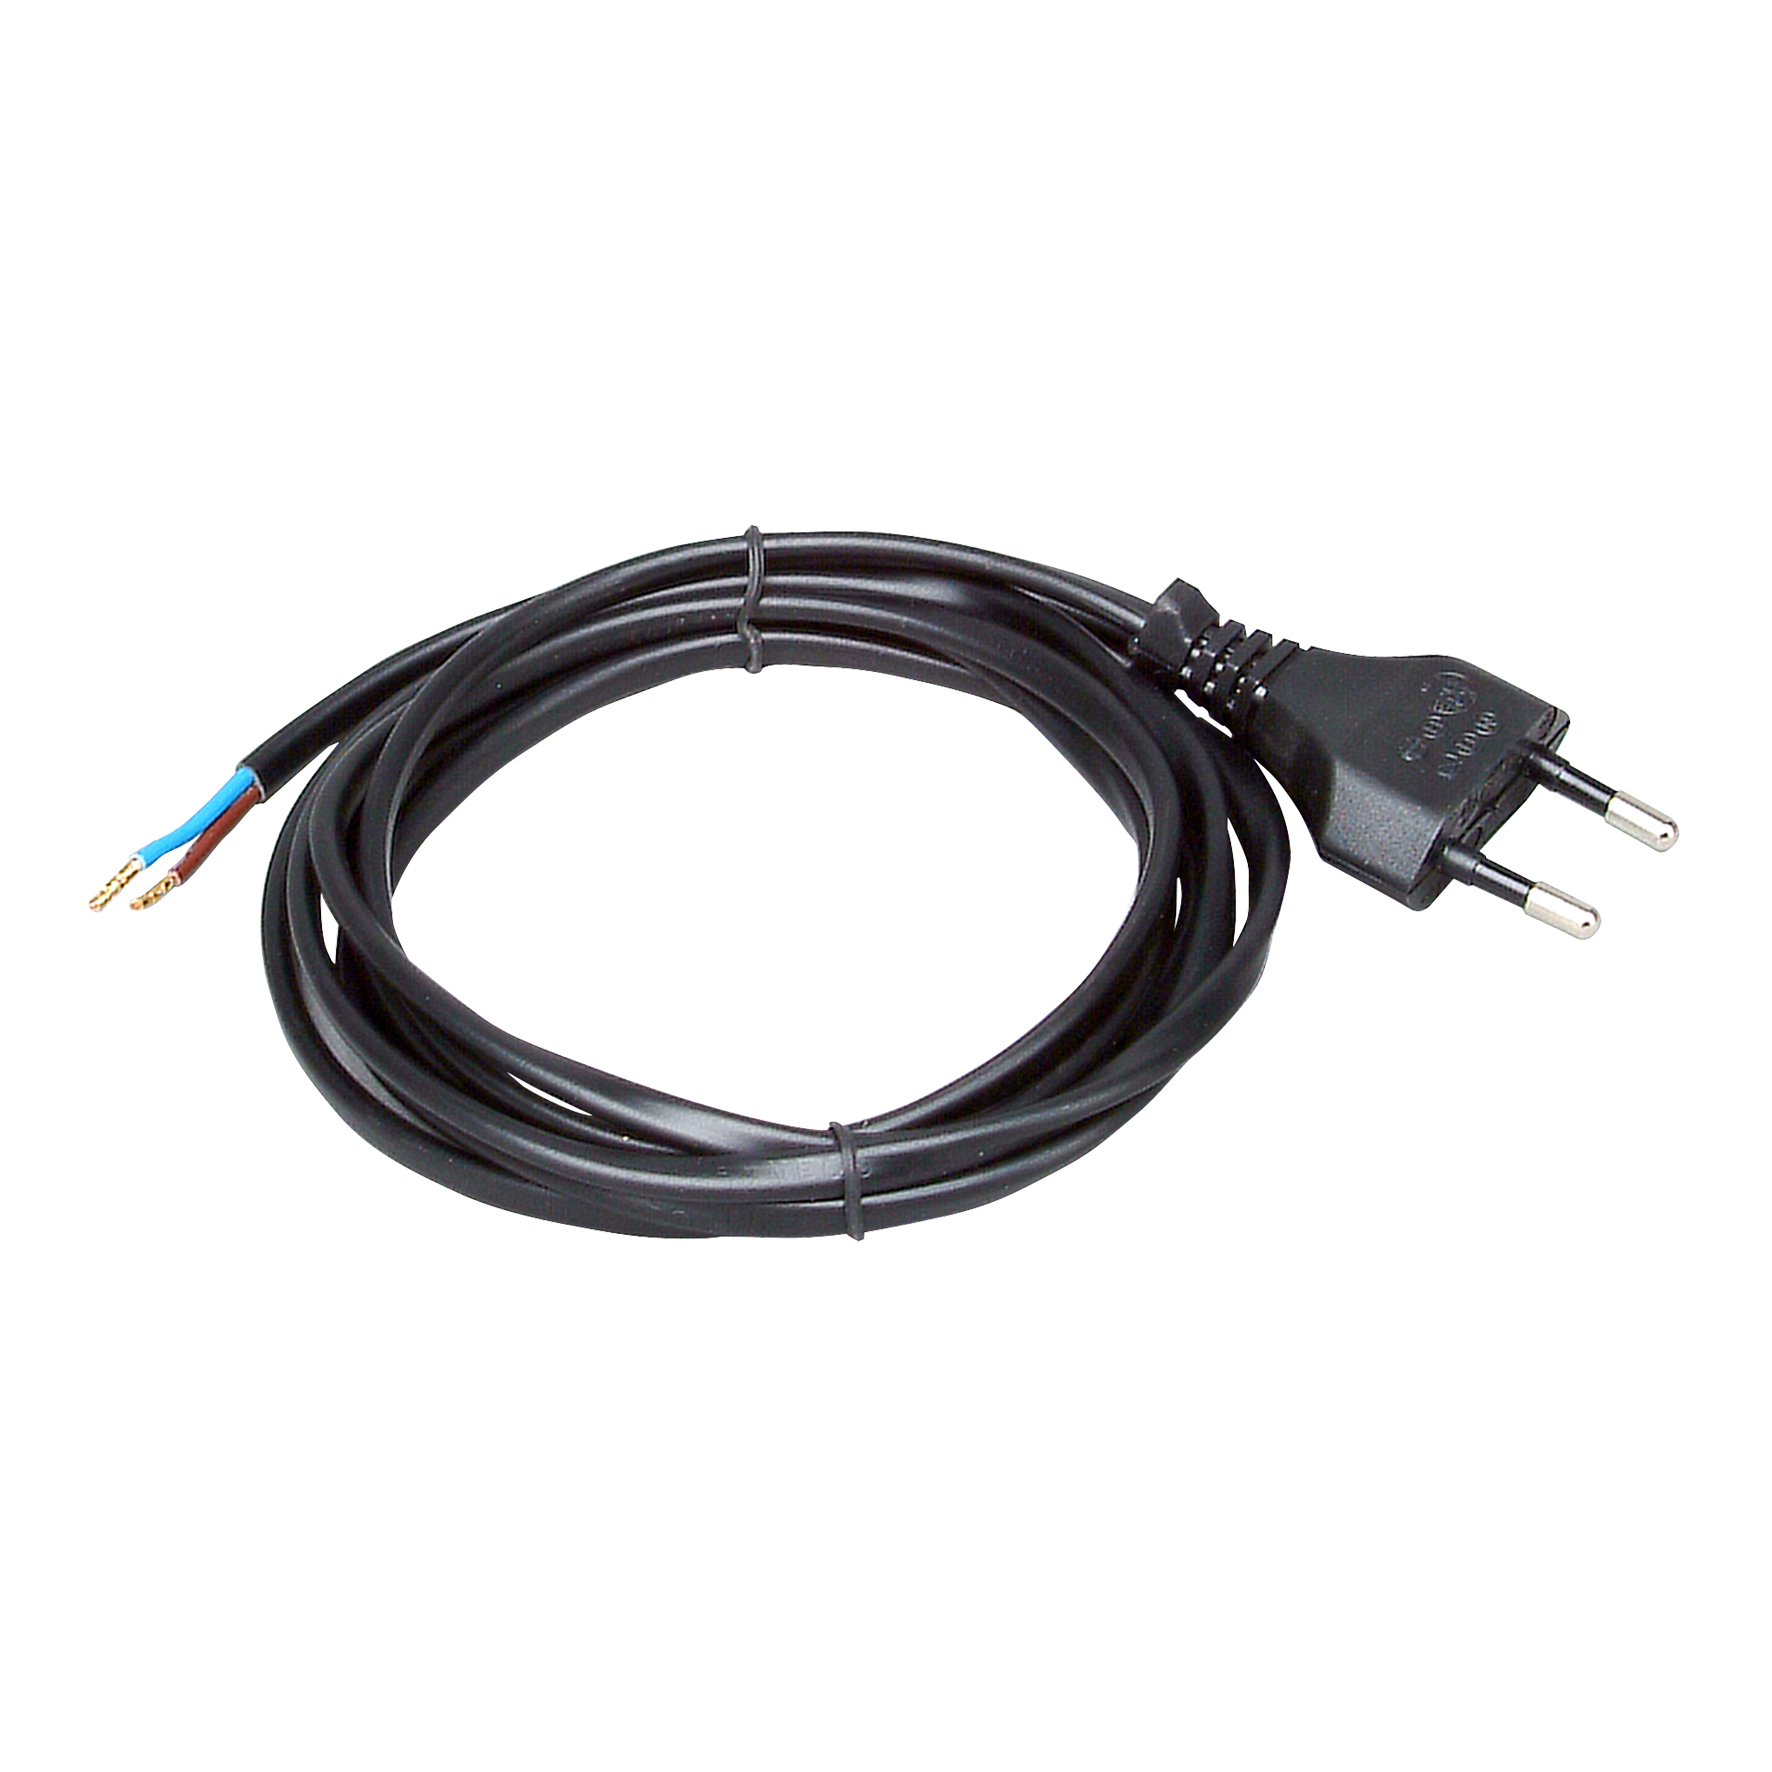 Kopp 140605097 Cable Lead 2C Euro plug 2M Black